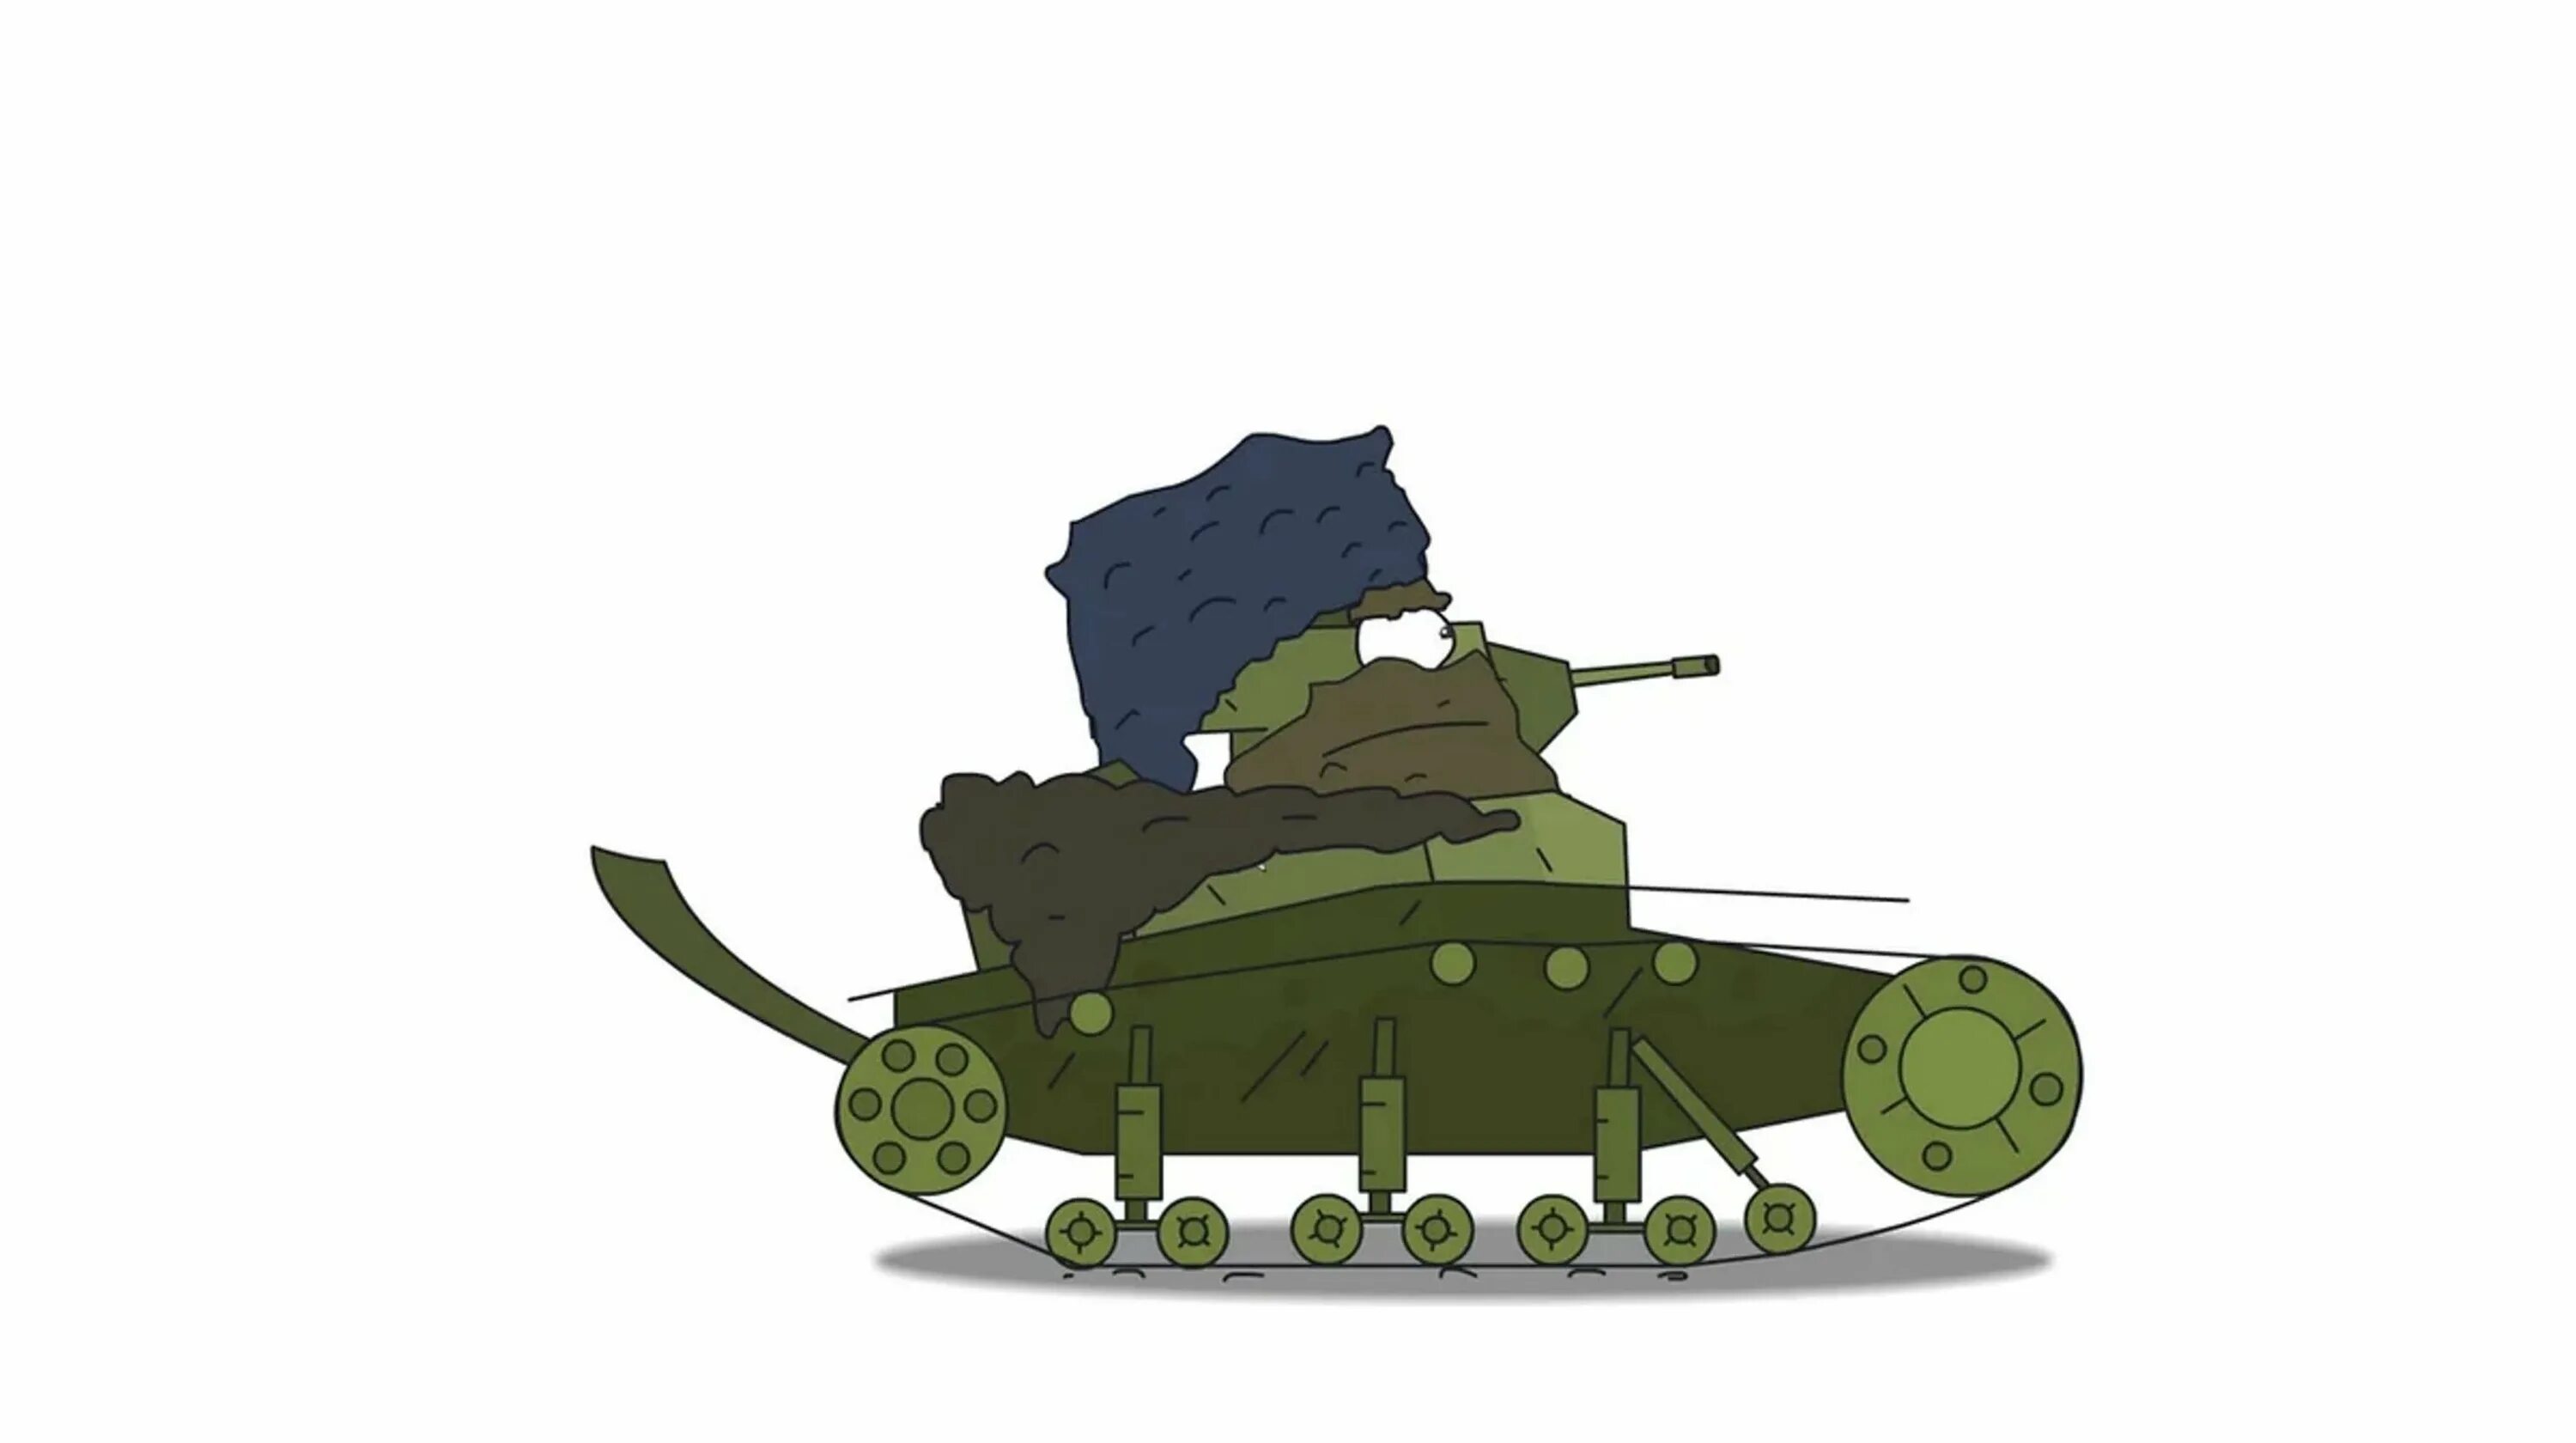 Мс кв. Генерал МС 1 Геранд. МС-1 танк Геранд. Танк МС-1 Геранд генеранд.